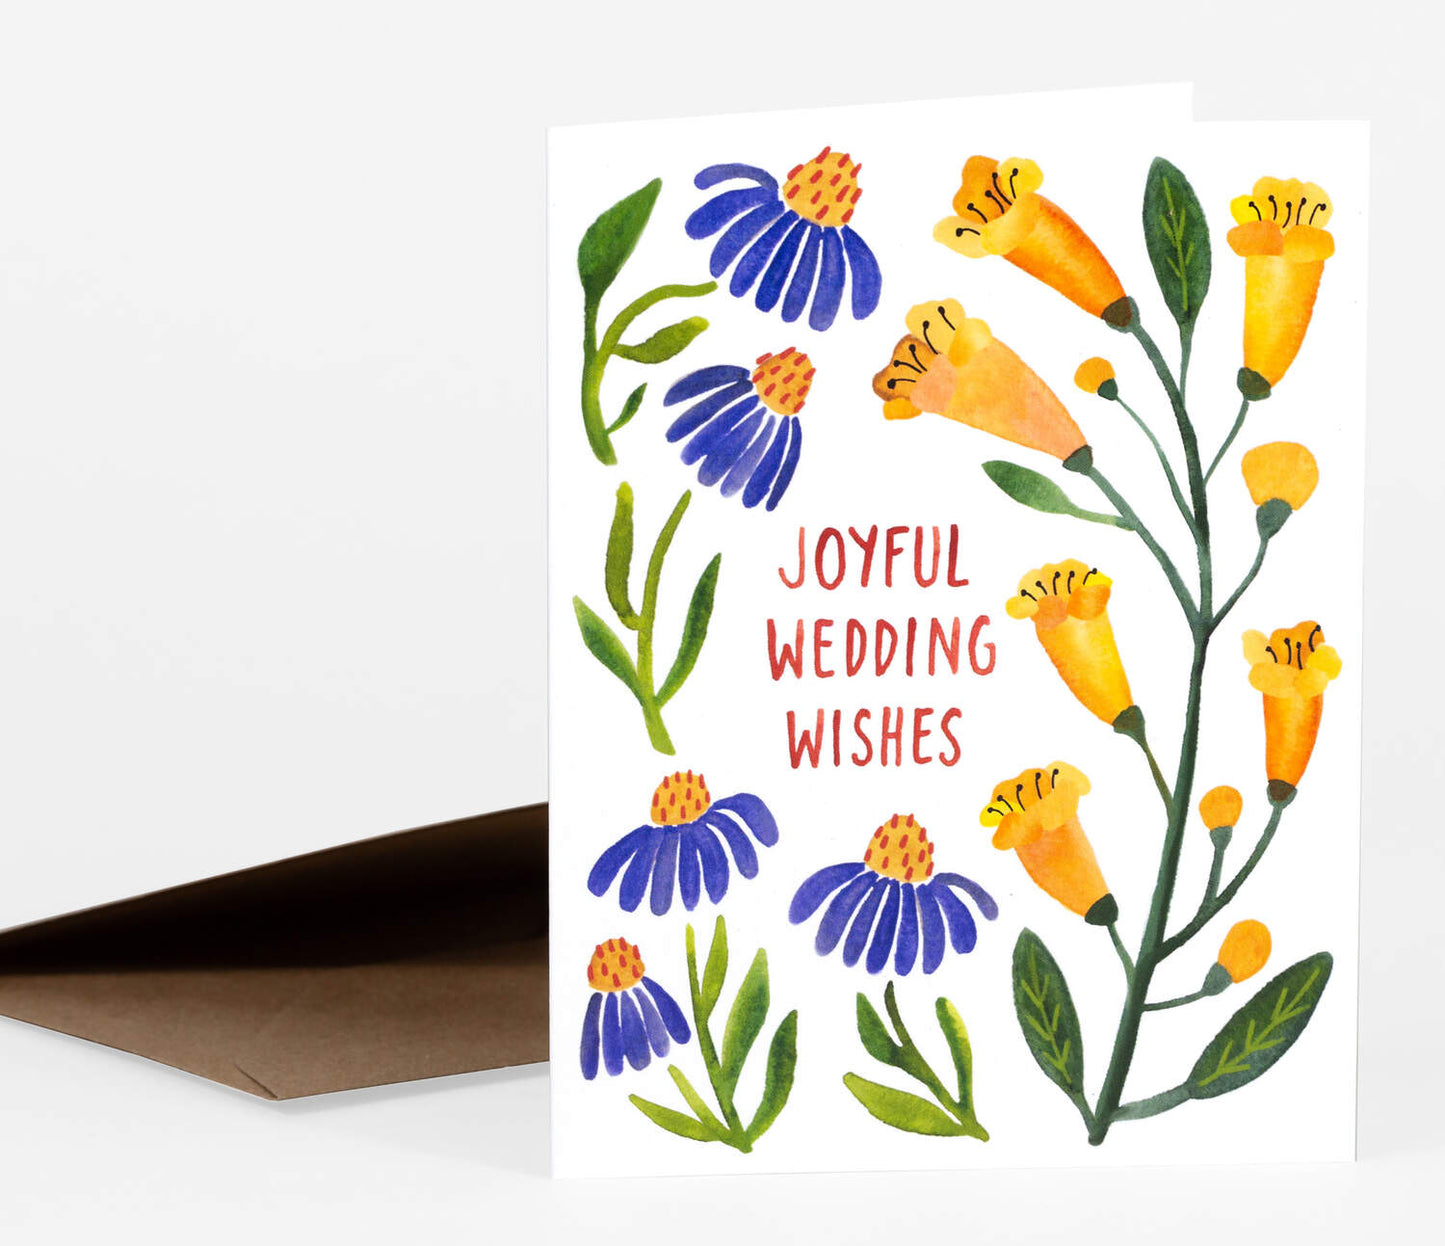 Joyful Wedding Wishes Greeting Card